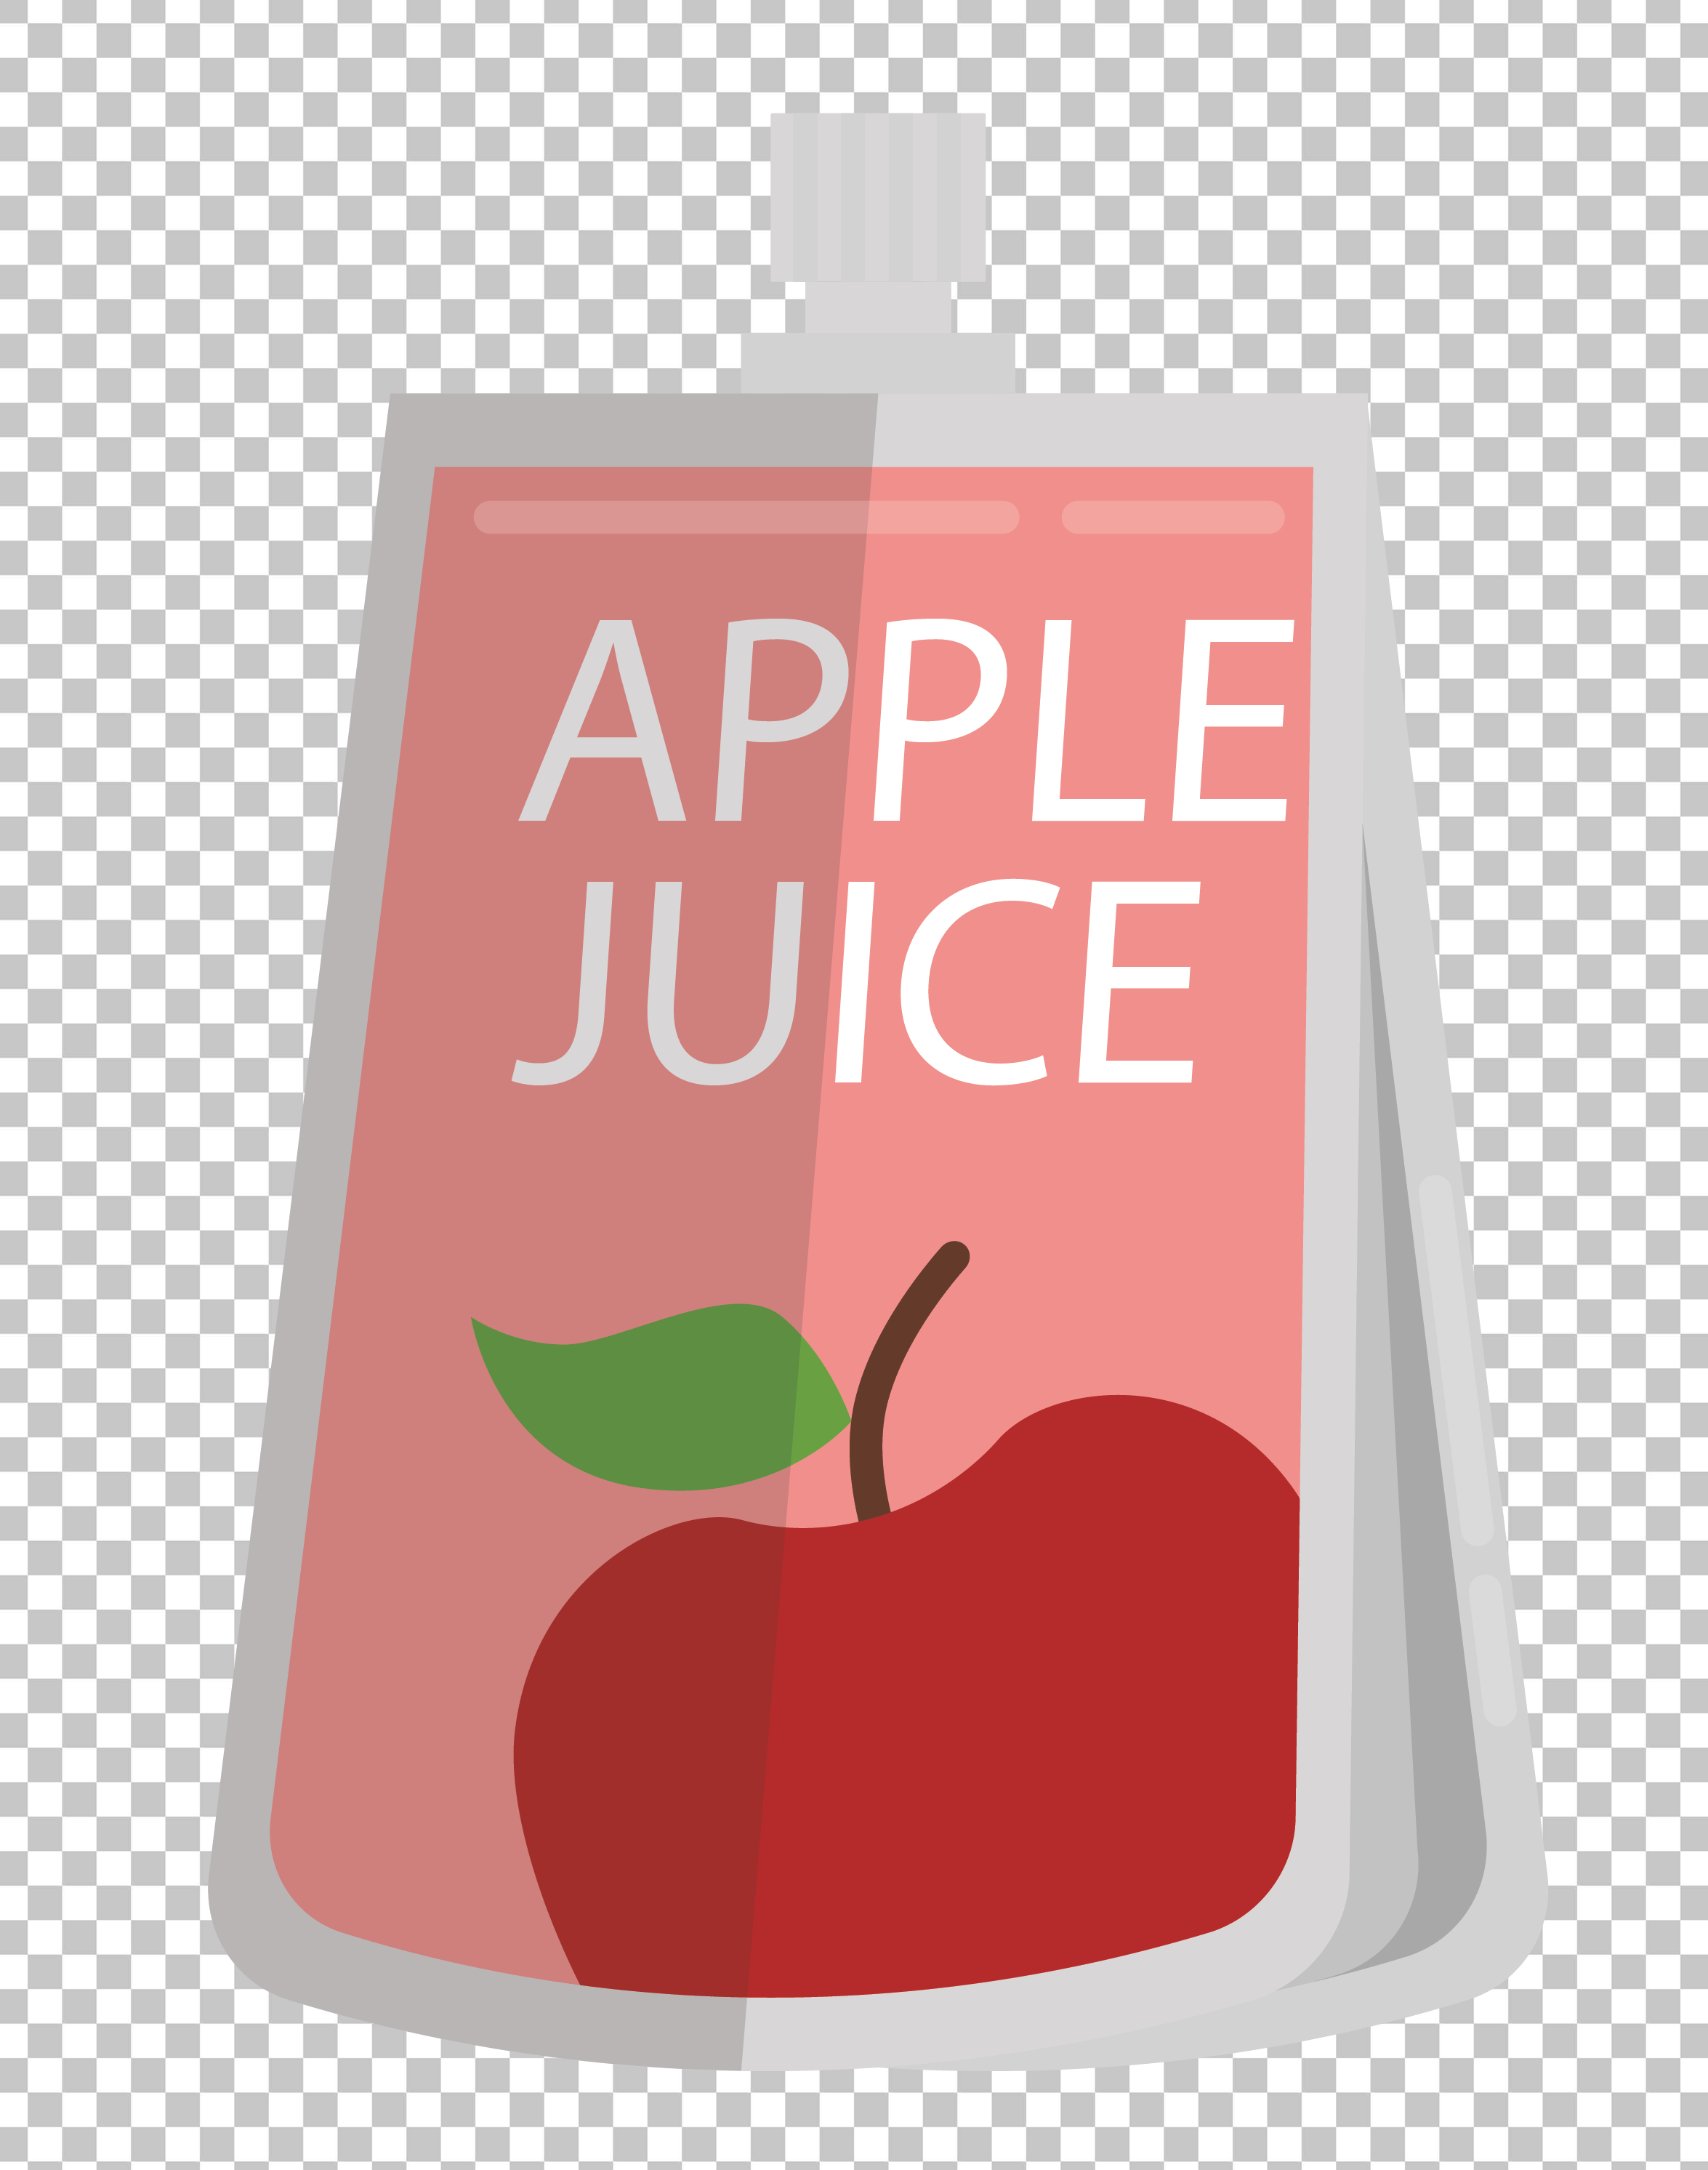 Apple Juice Pouch PNG Image.